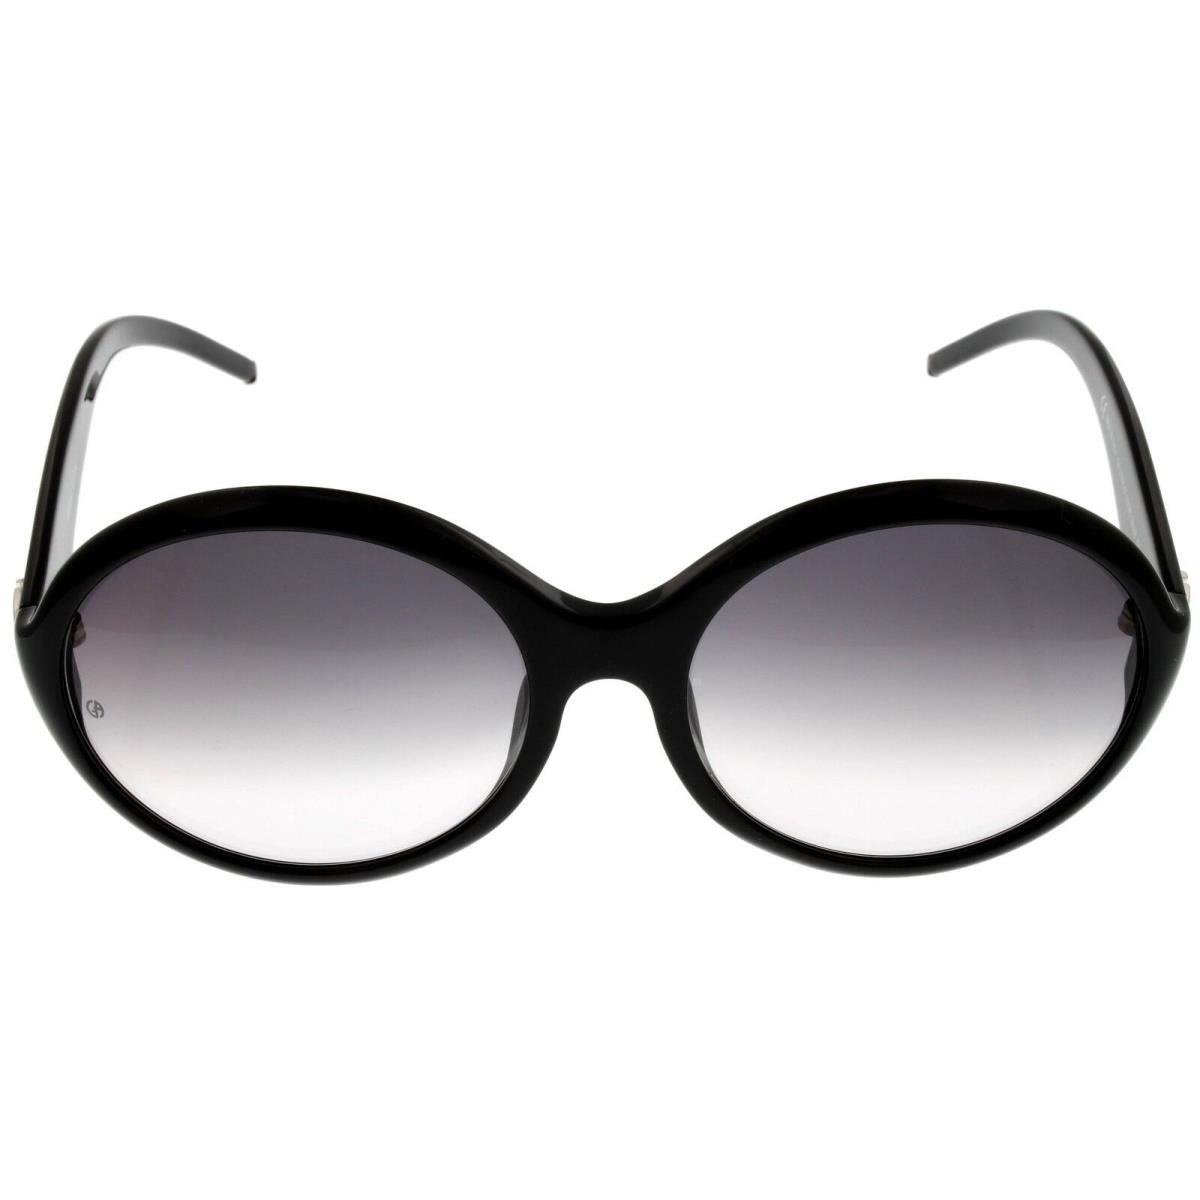 Giorgio Armani Sunglasses Women Black Gray Fashion Round GA378KS 807